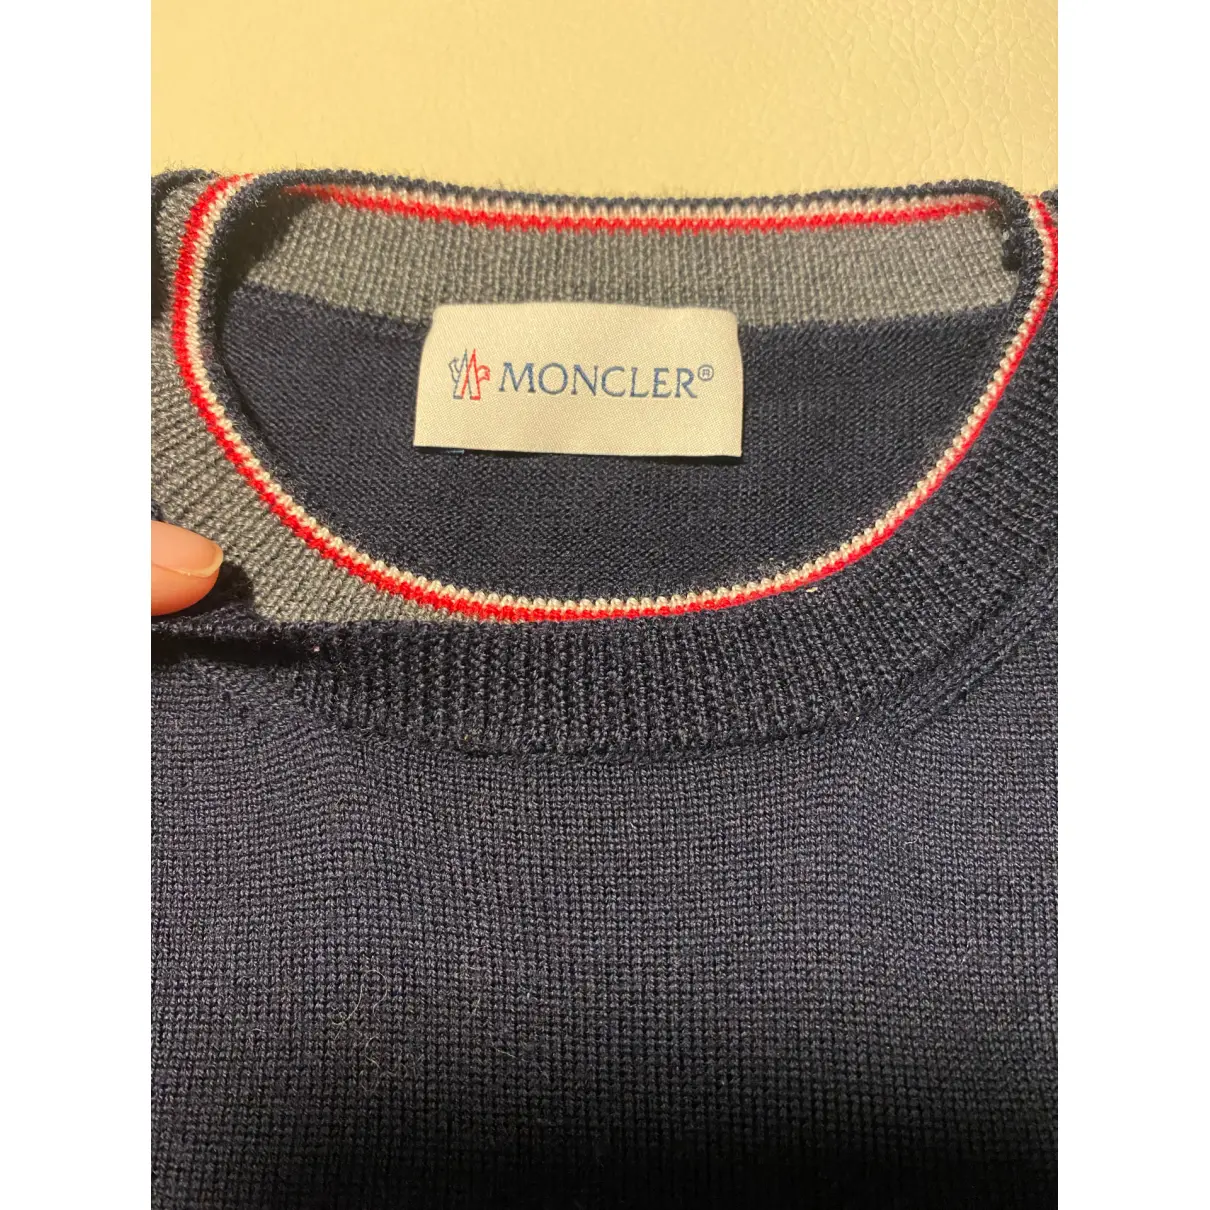 Buy Moncler Wool sweater online